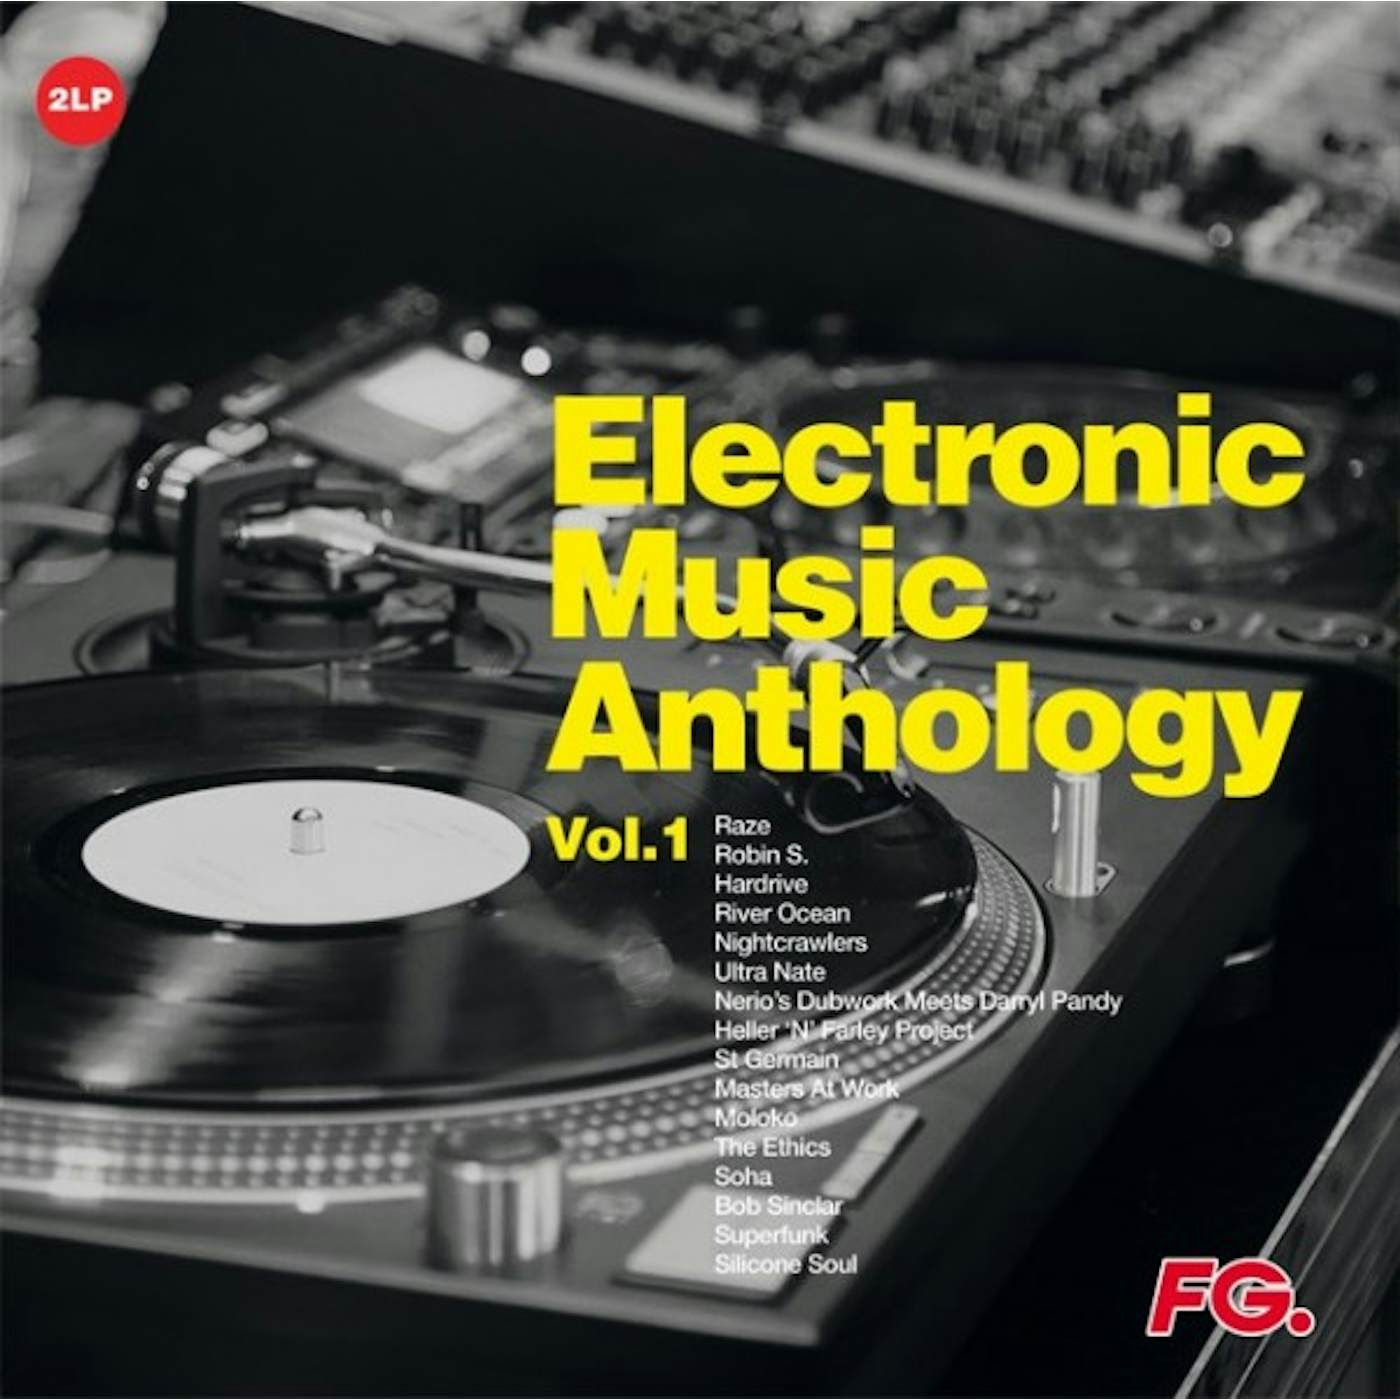 ELECTRONIC MUSIC ANTHOLOGY VOL 1 / VARIOUS Vinyl Record